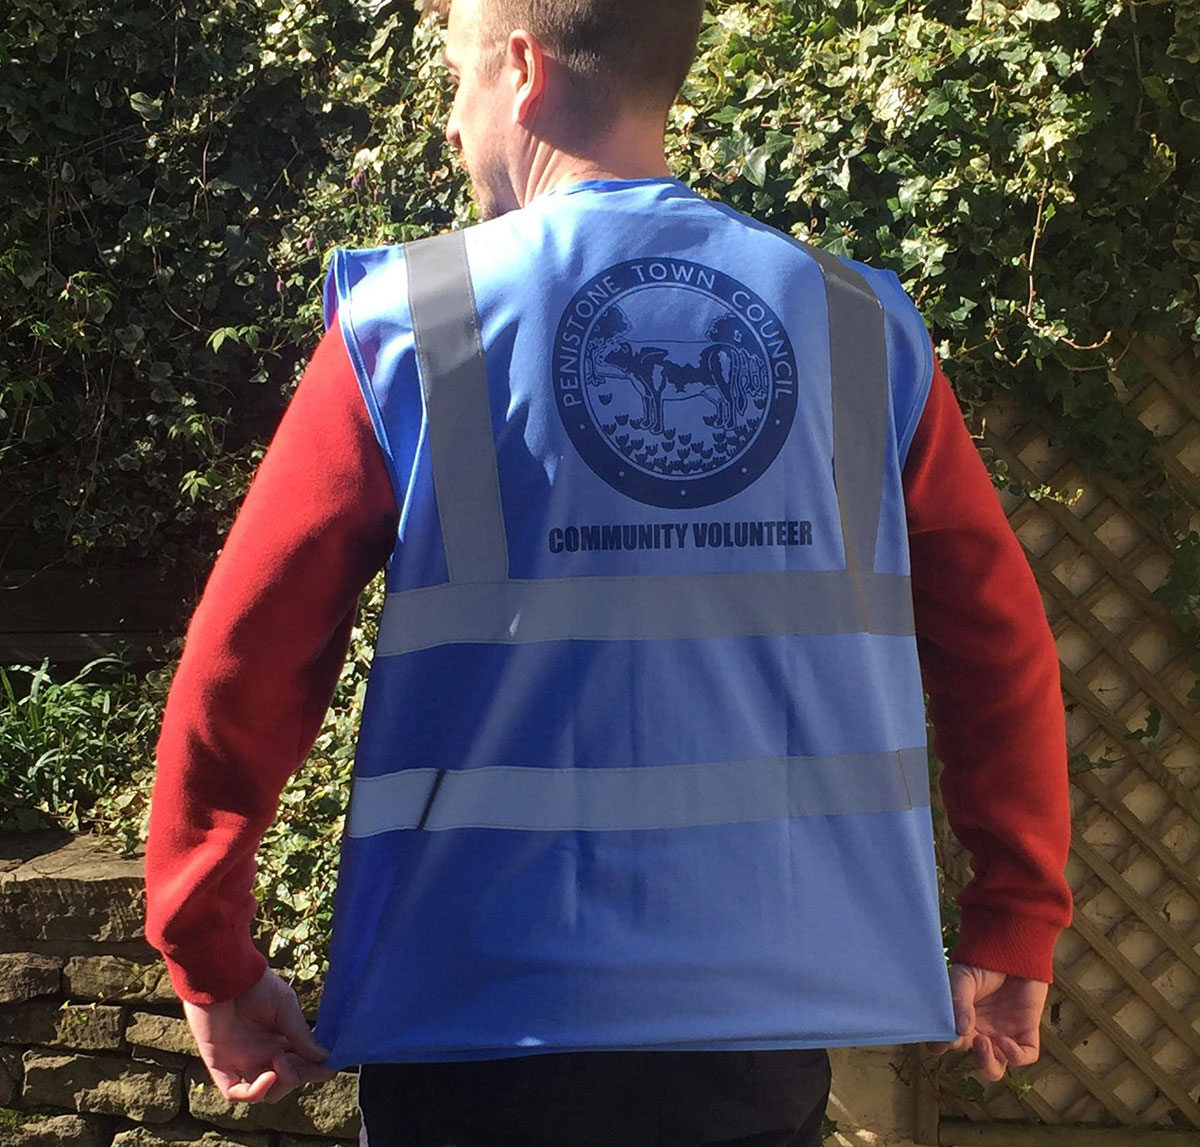 Image of vest to be worn by volunteers